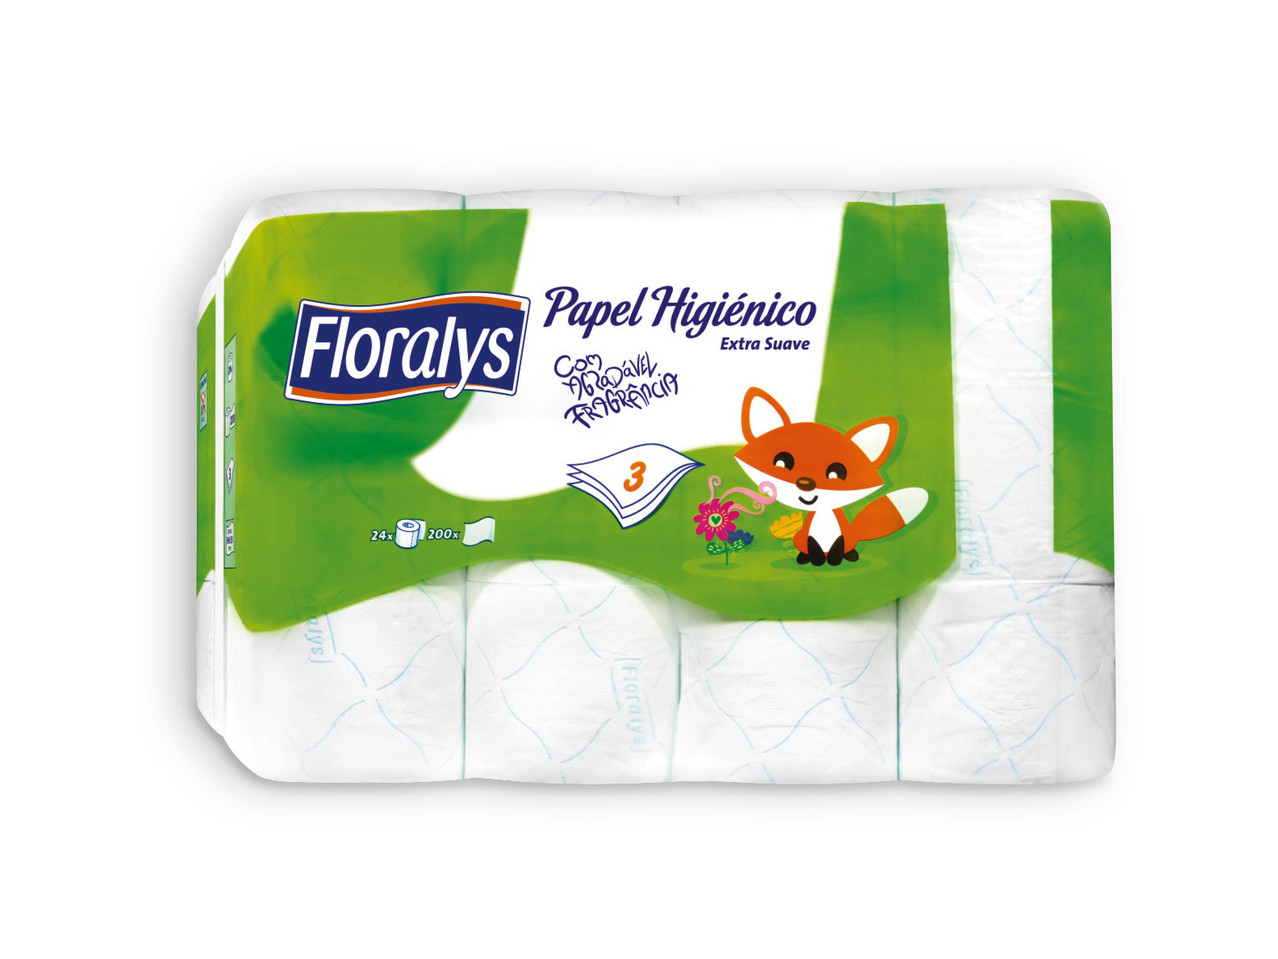 FLORALYS(R) Papel Higiénico 3 Folhas